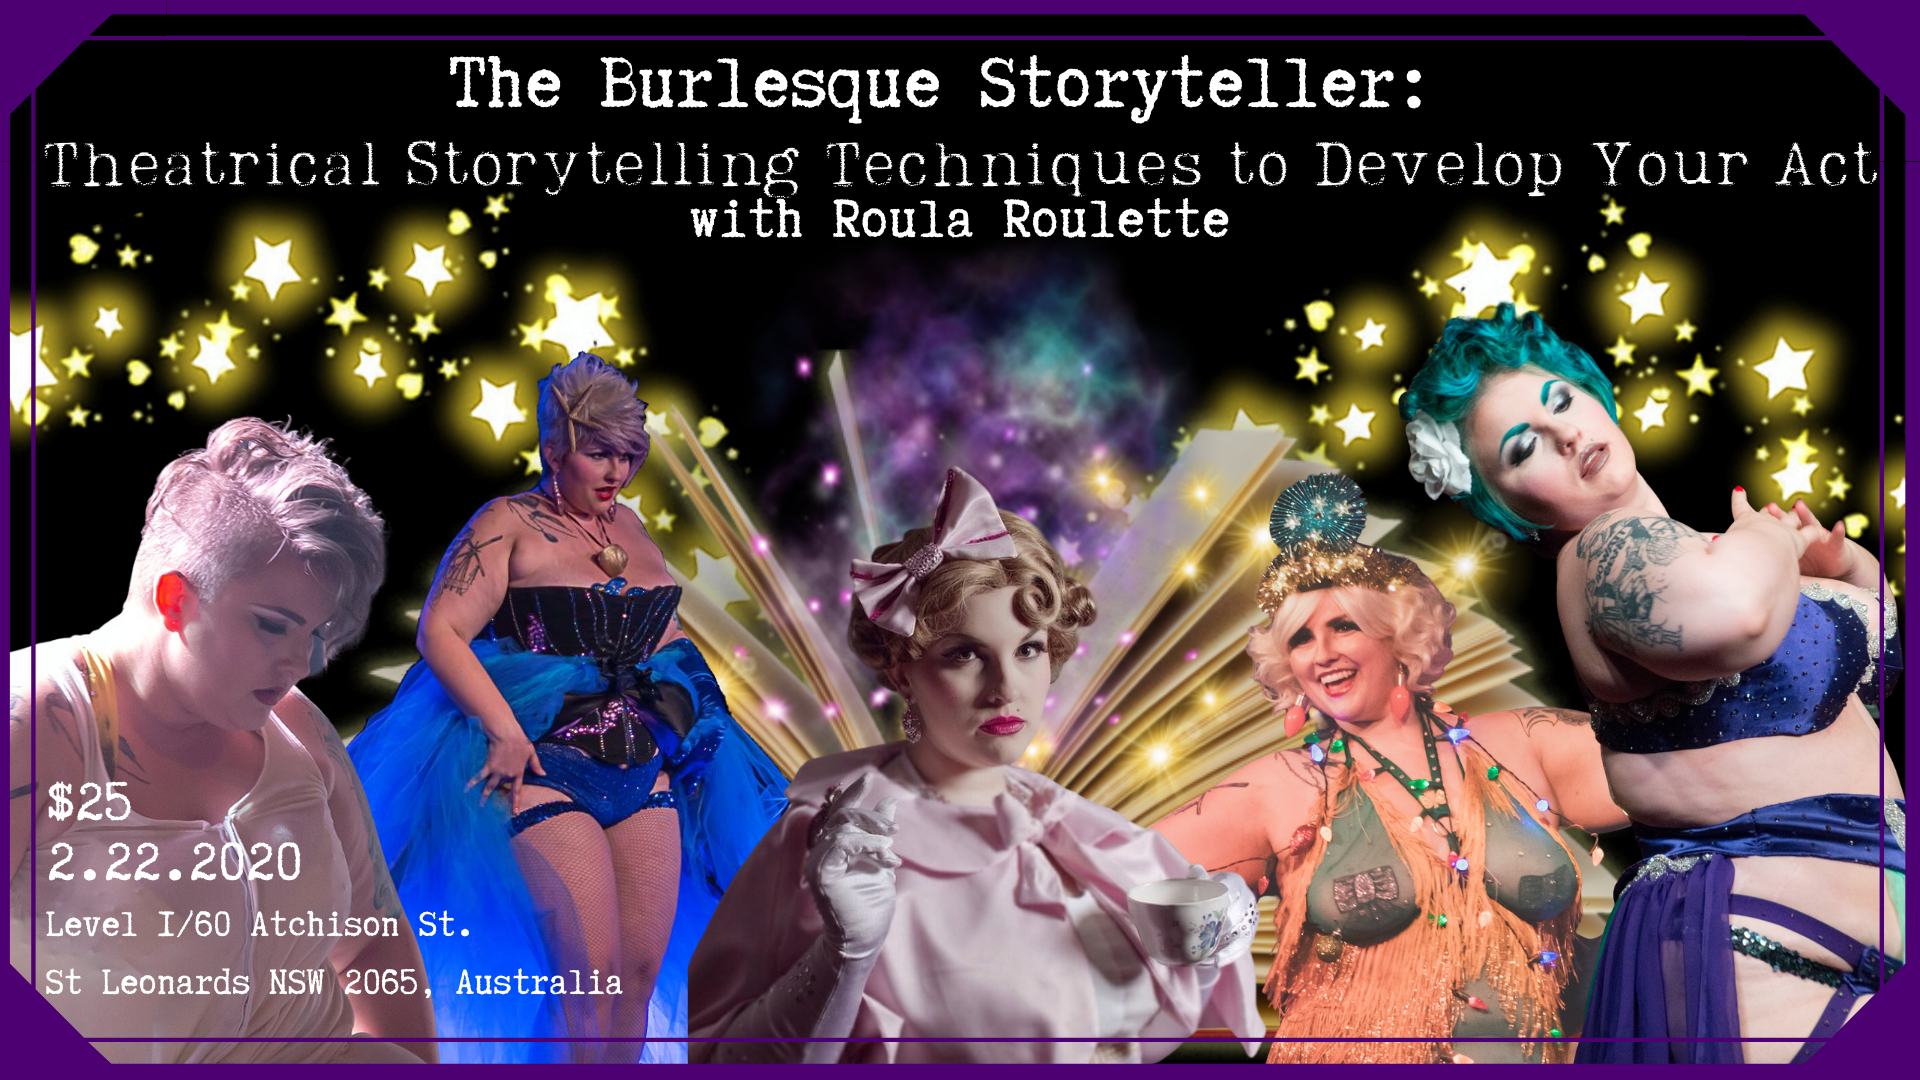 The Burlesque Storyteller: Using Theatrical Storytelling Techniques 